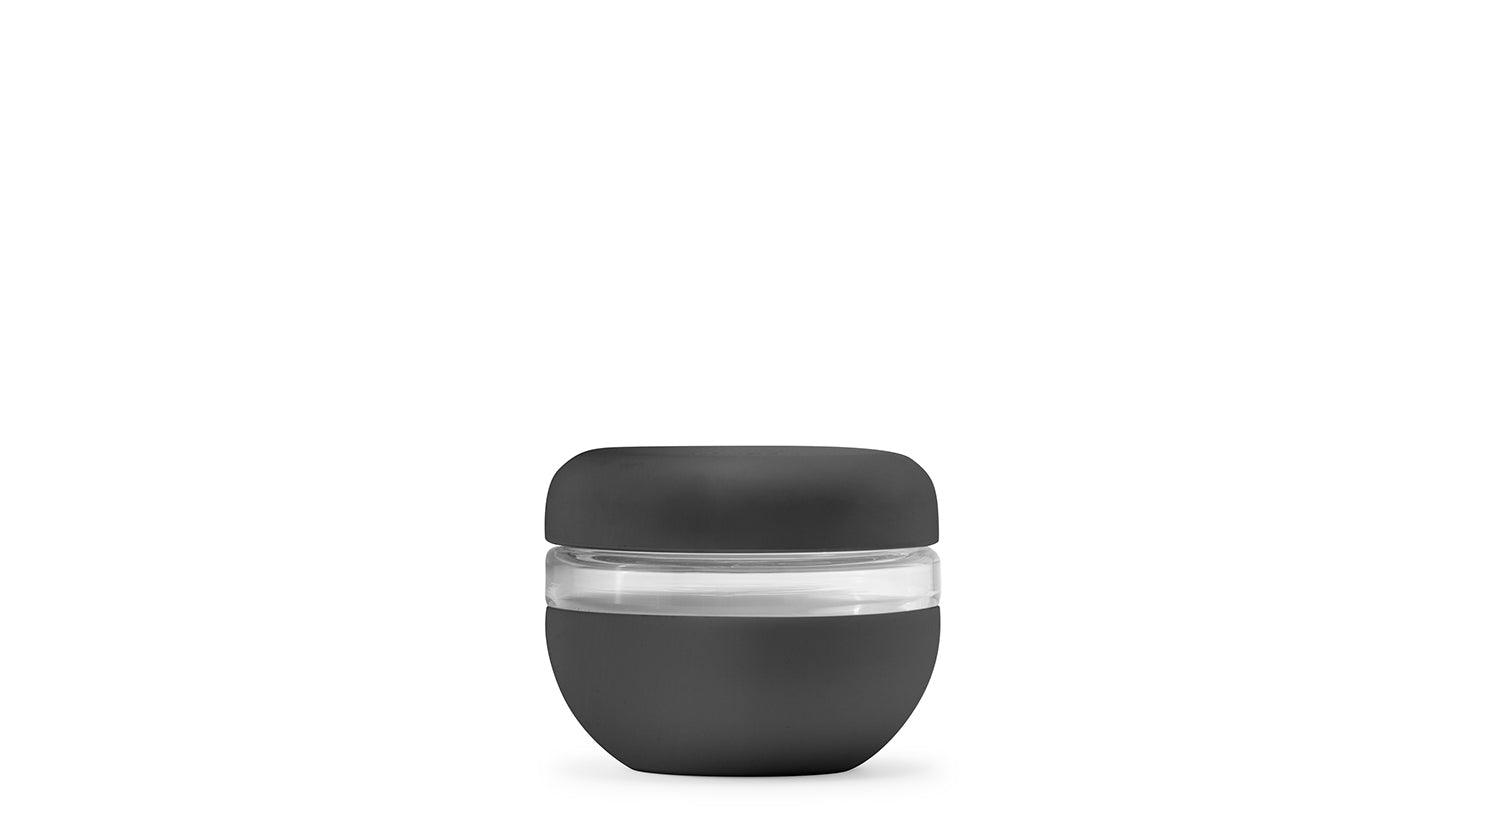 W&P Porter Seal Tight Bowl 24 oz - ShopStyle Servingware